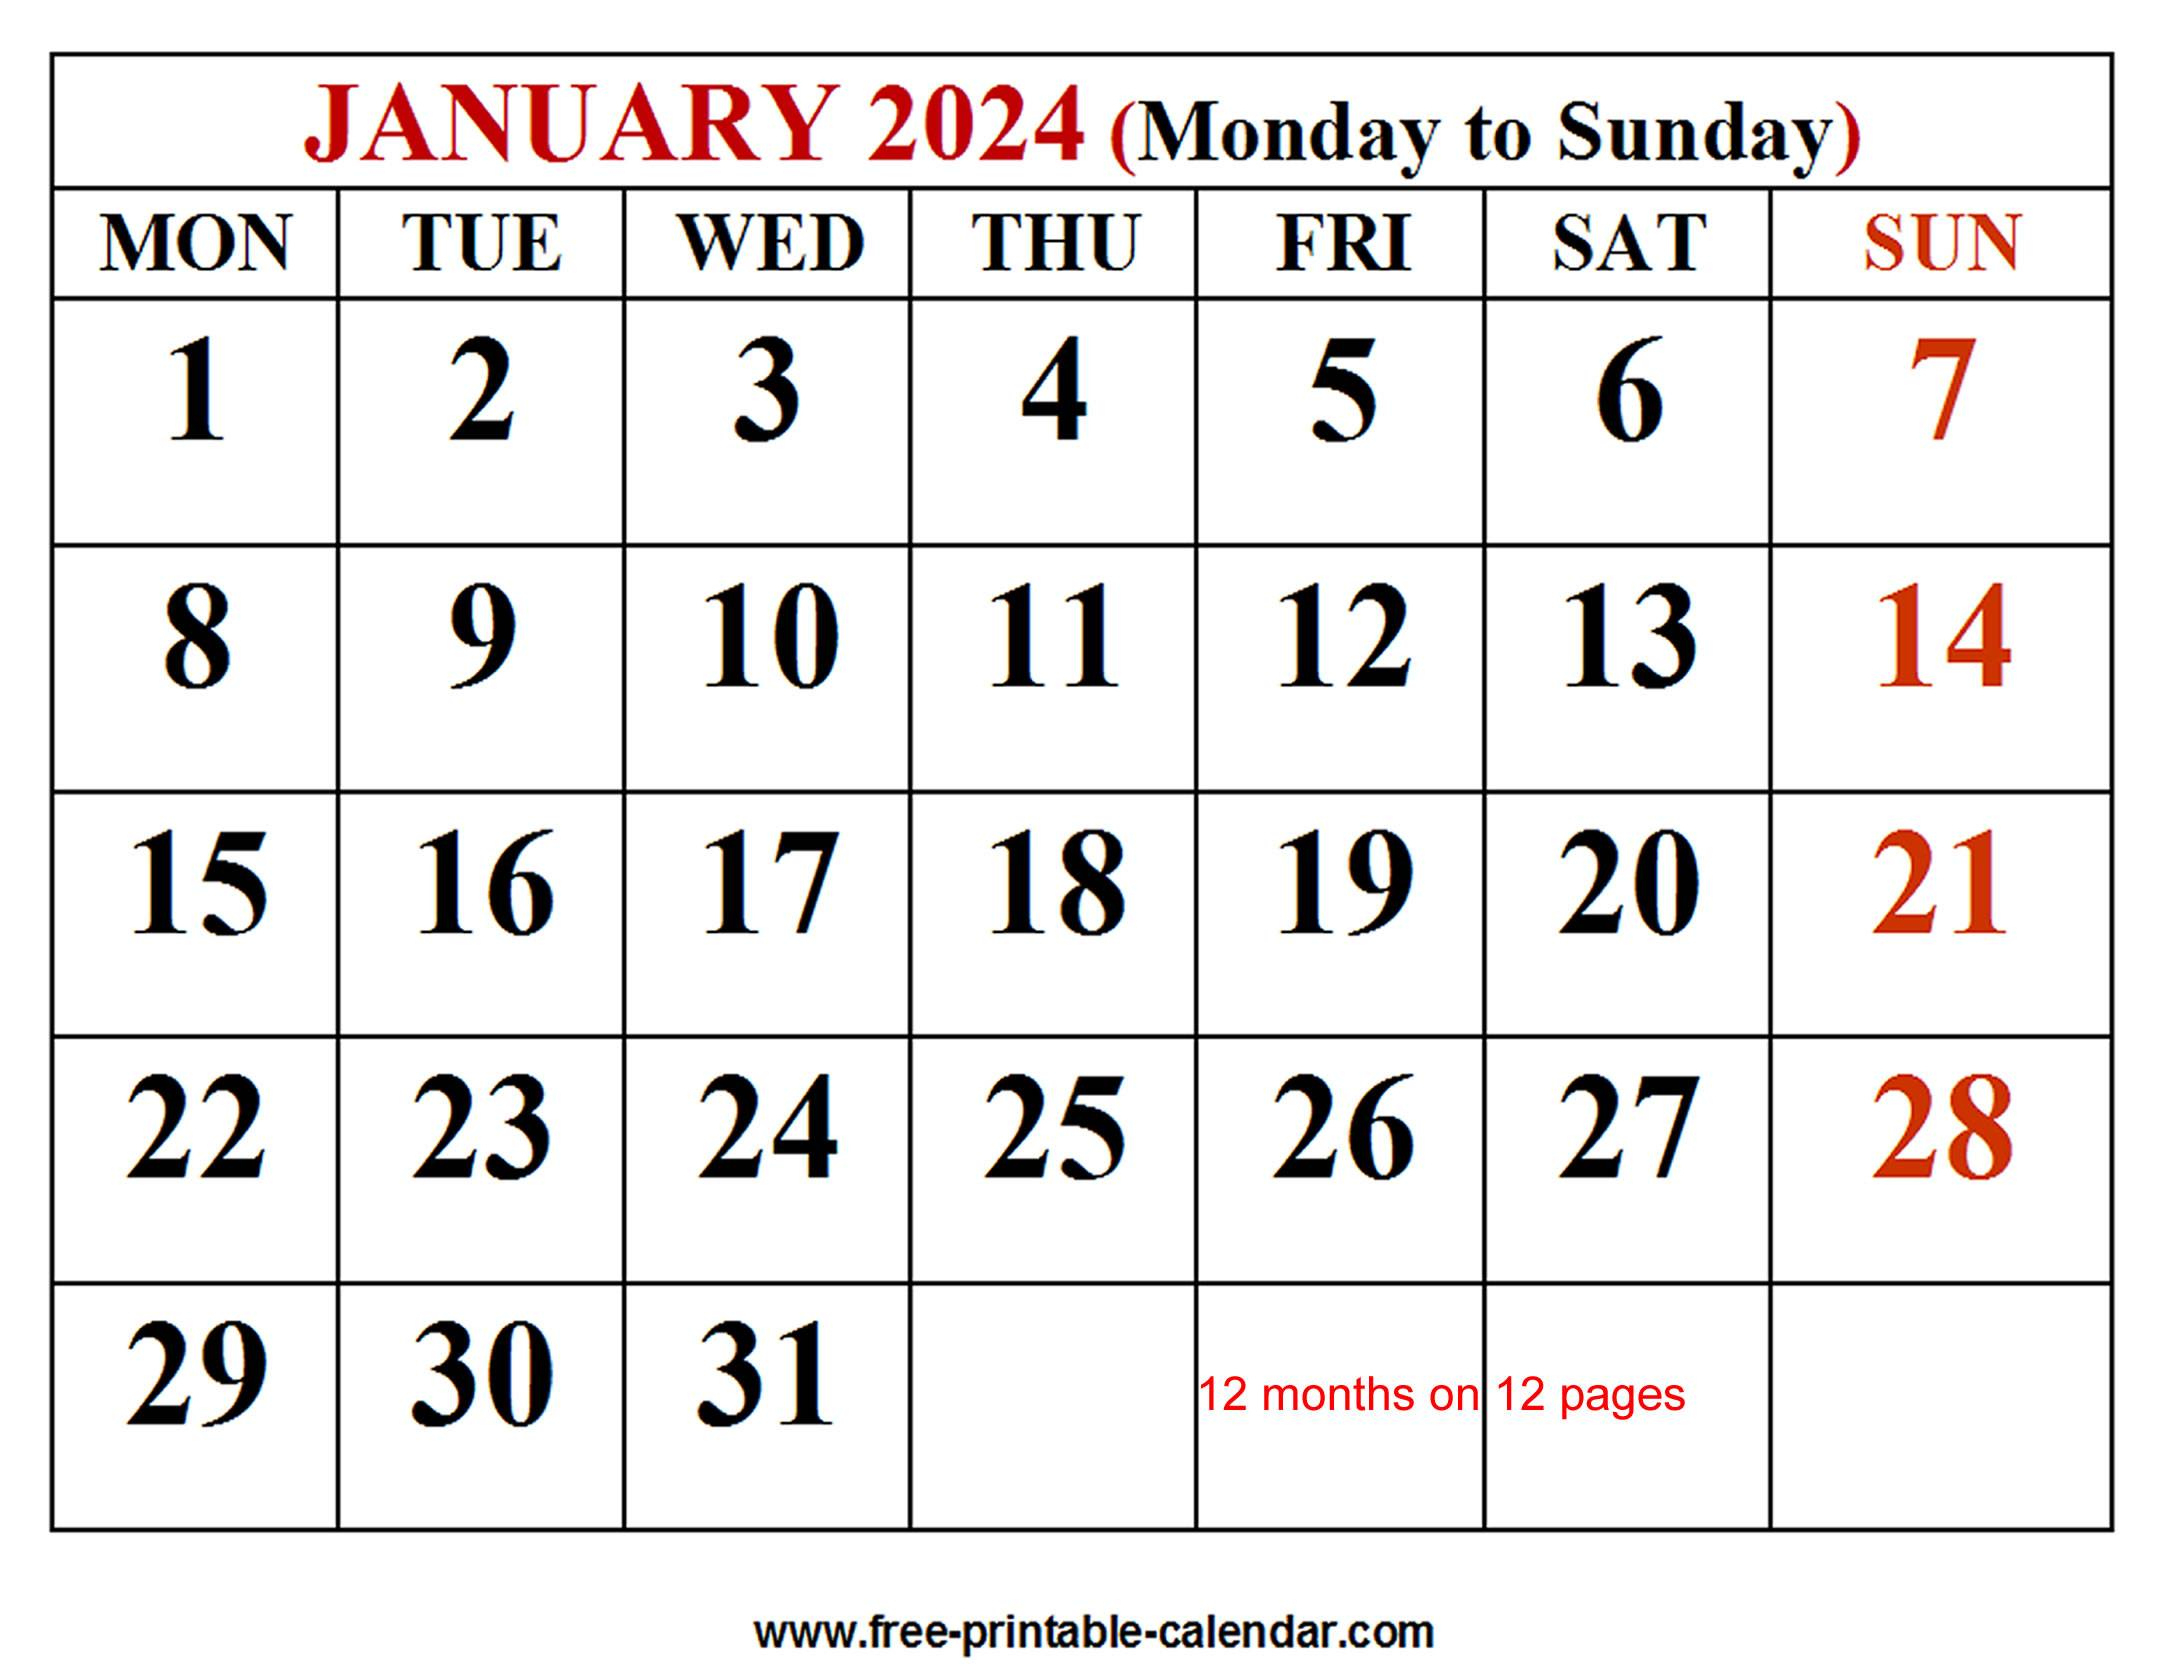 2024 Calendar Template - Free-Printable-Calendar | Free Printable Calendar Templates 2024